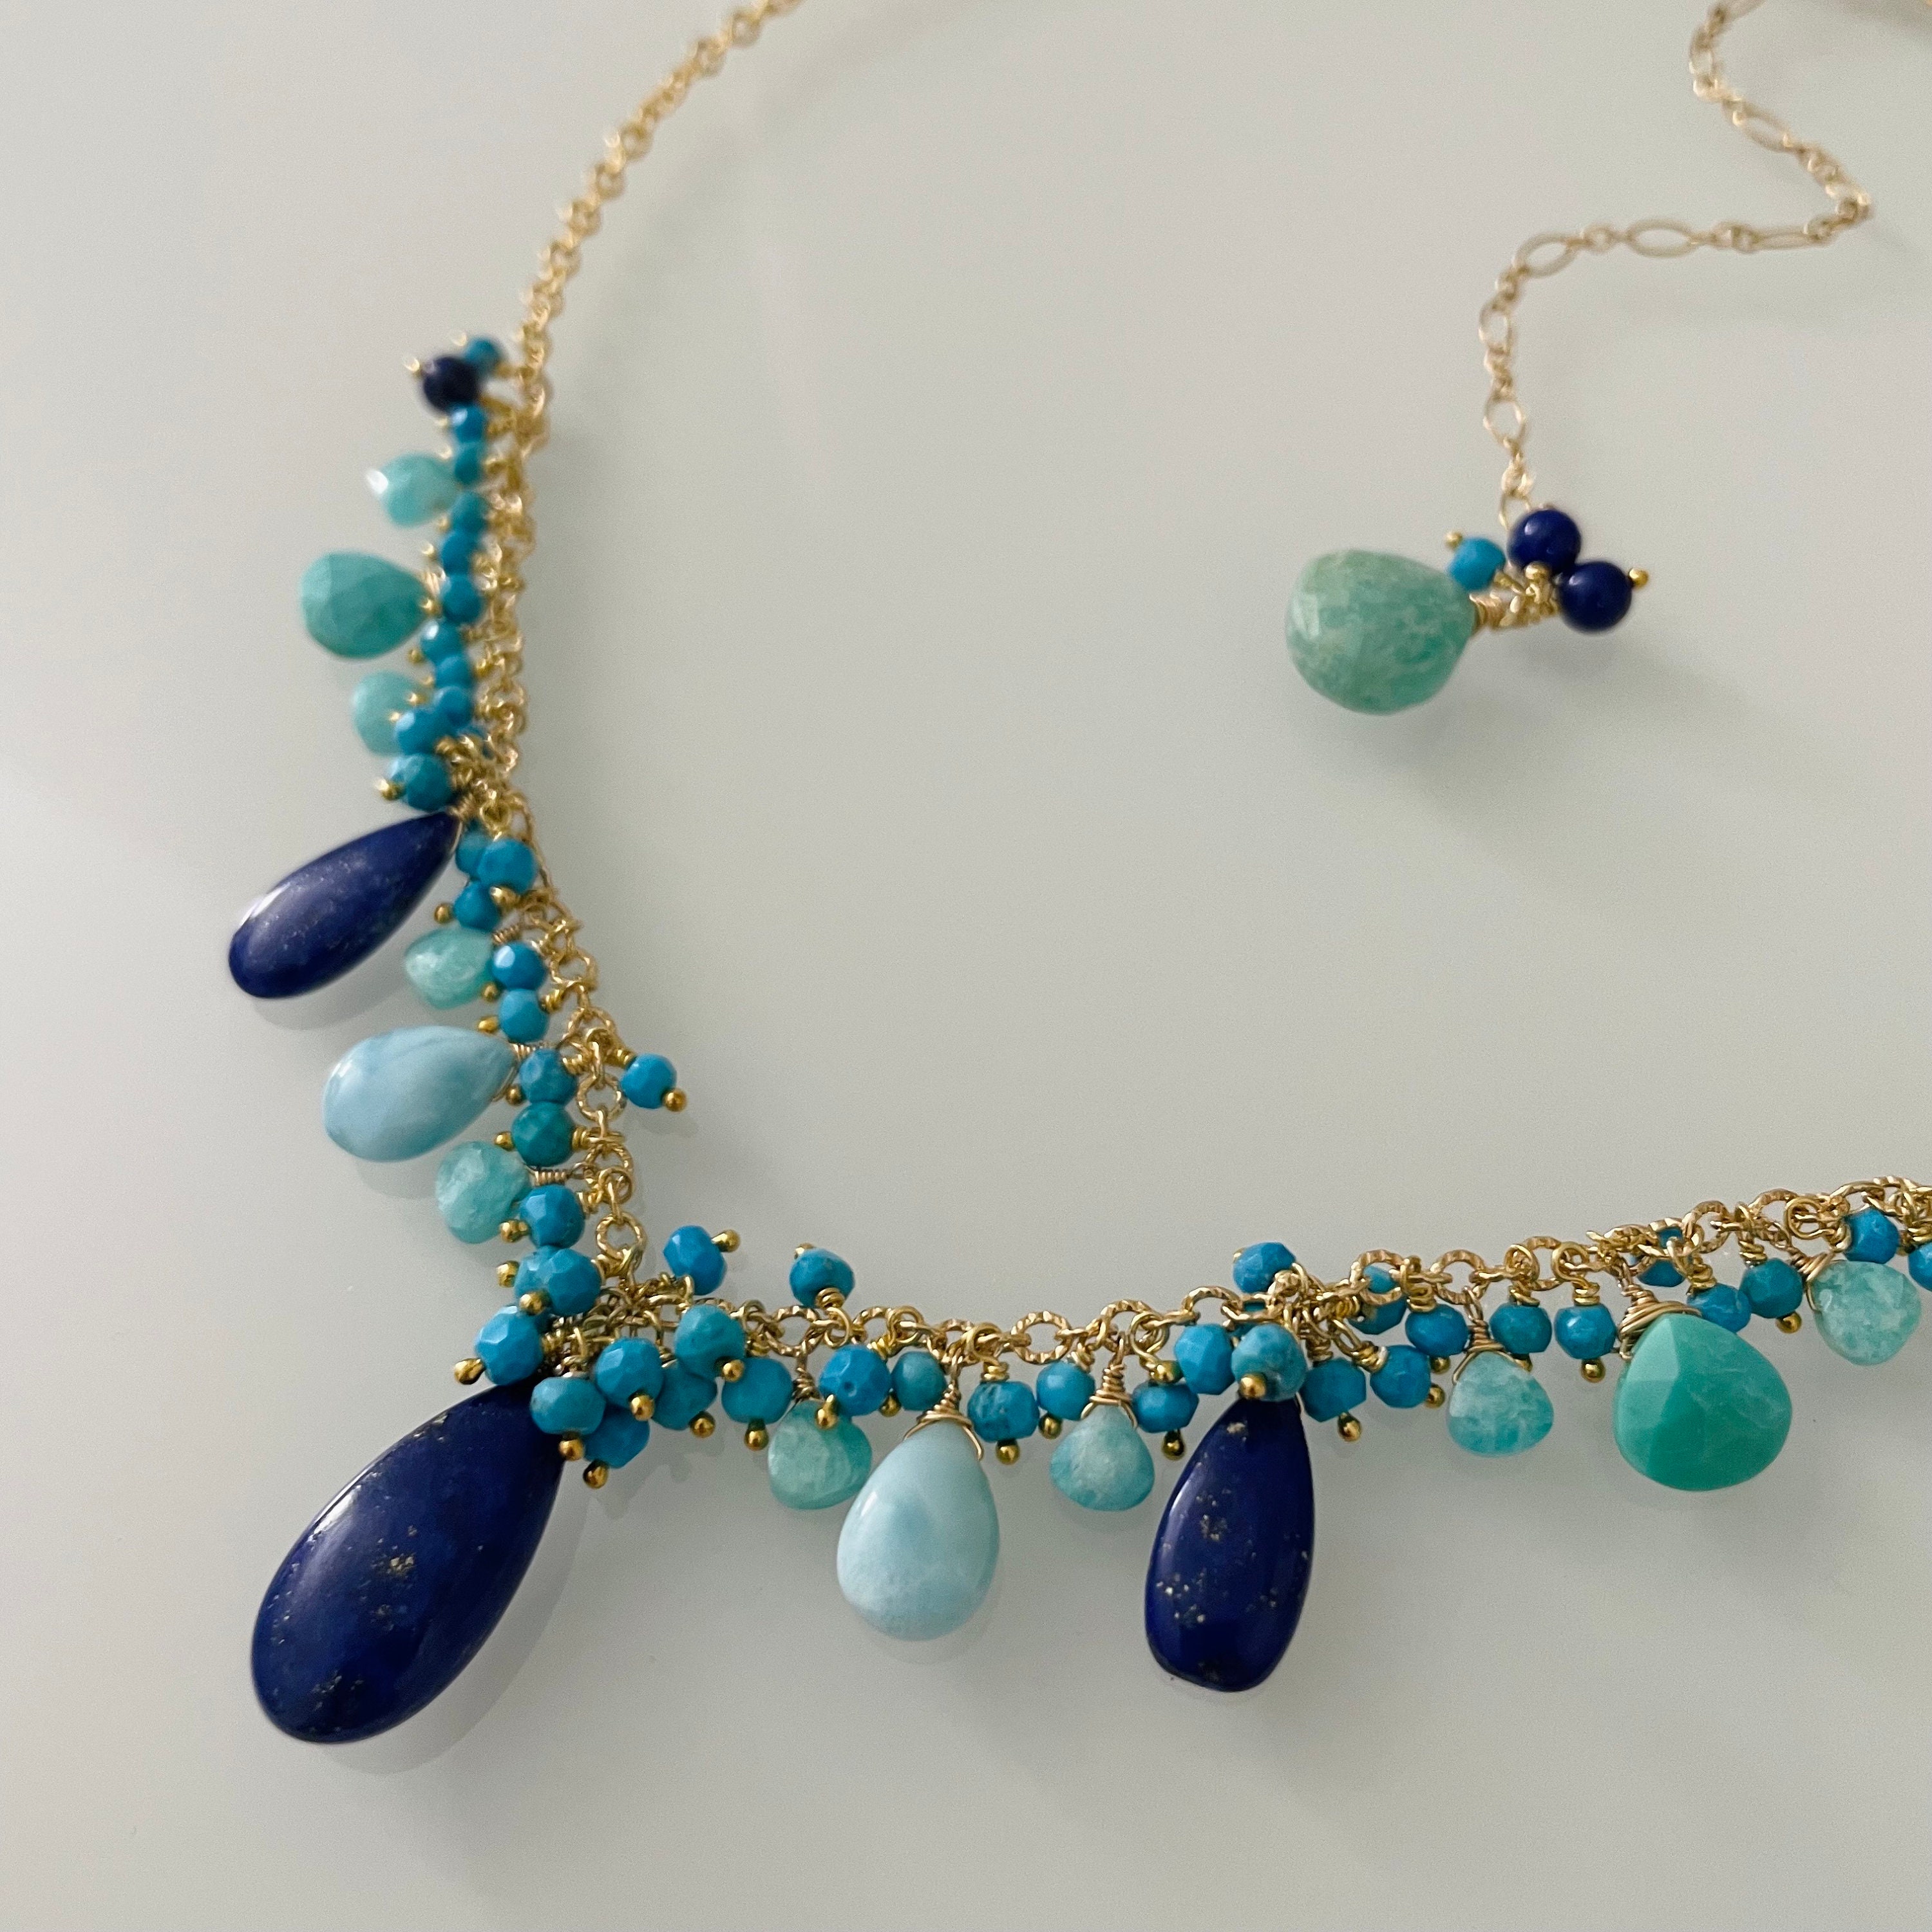 Sleeping beauty scallop necklace #4620-G — Michelle Pressler Jewelry